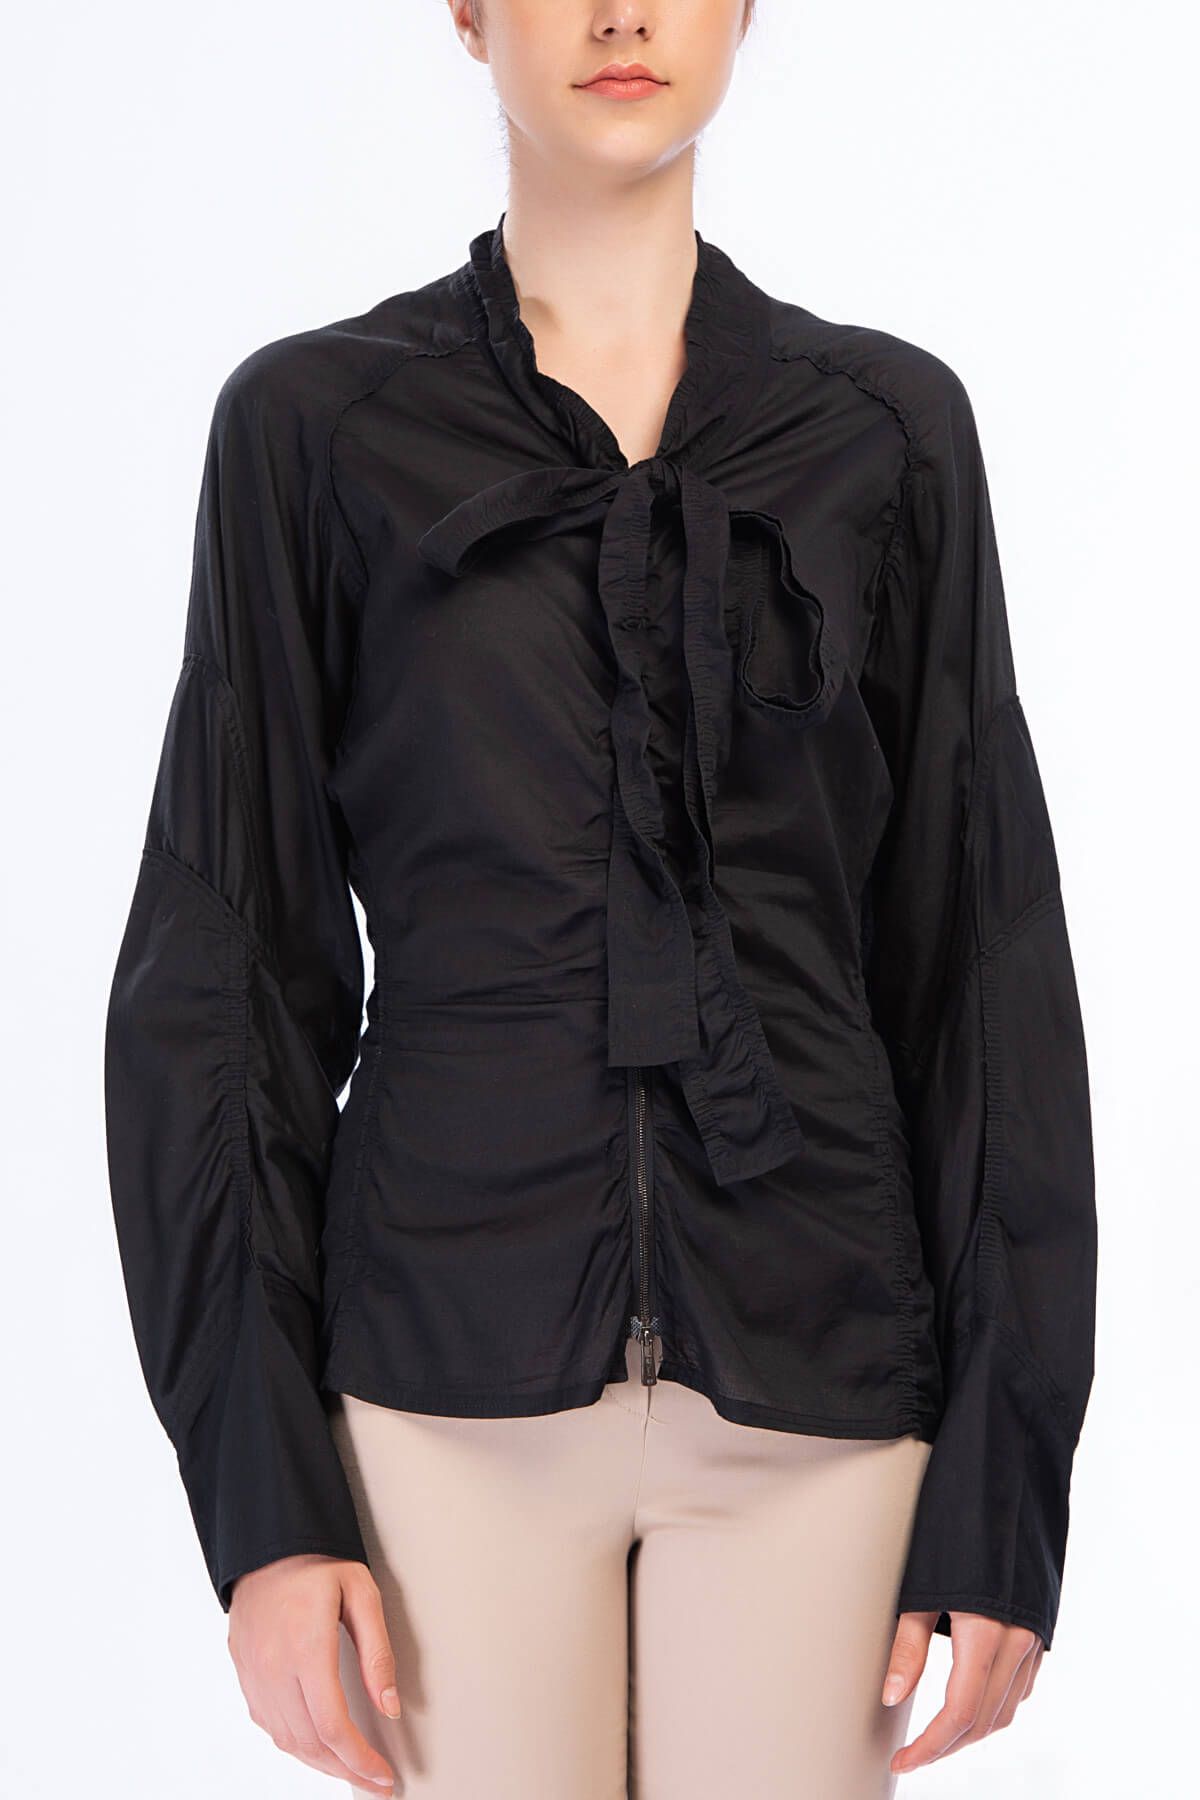 Yves Saint Laurent Kadın Siyah Gömlek (4918)